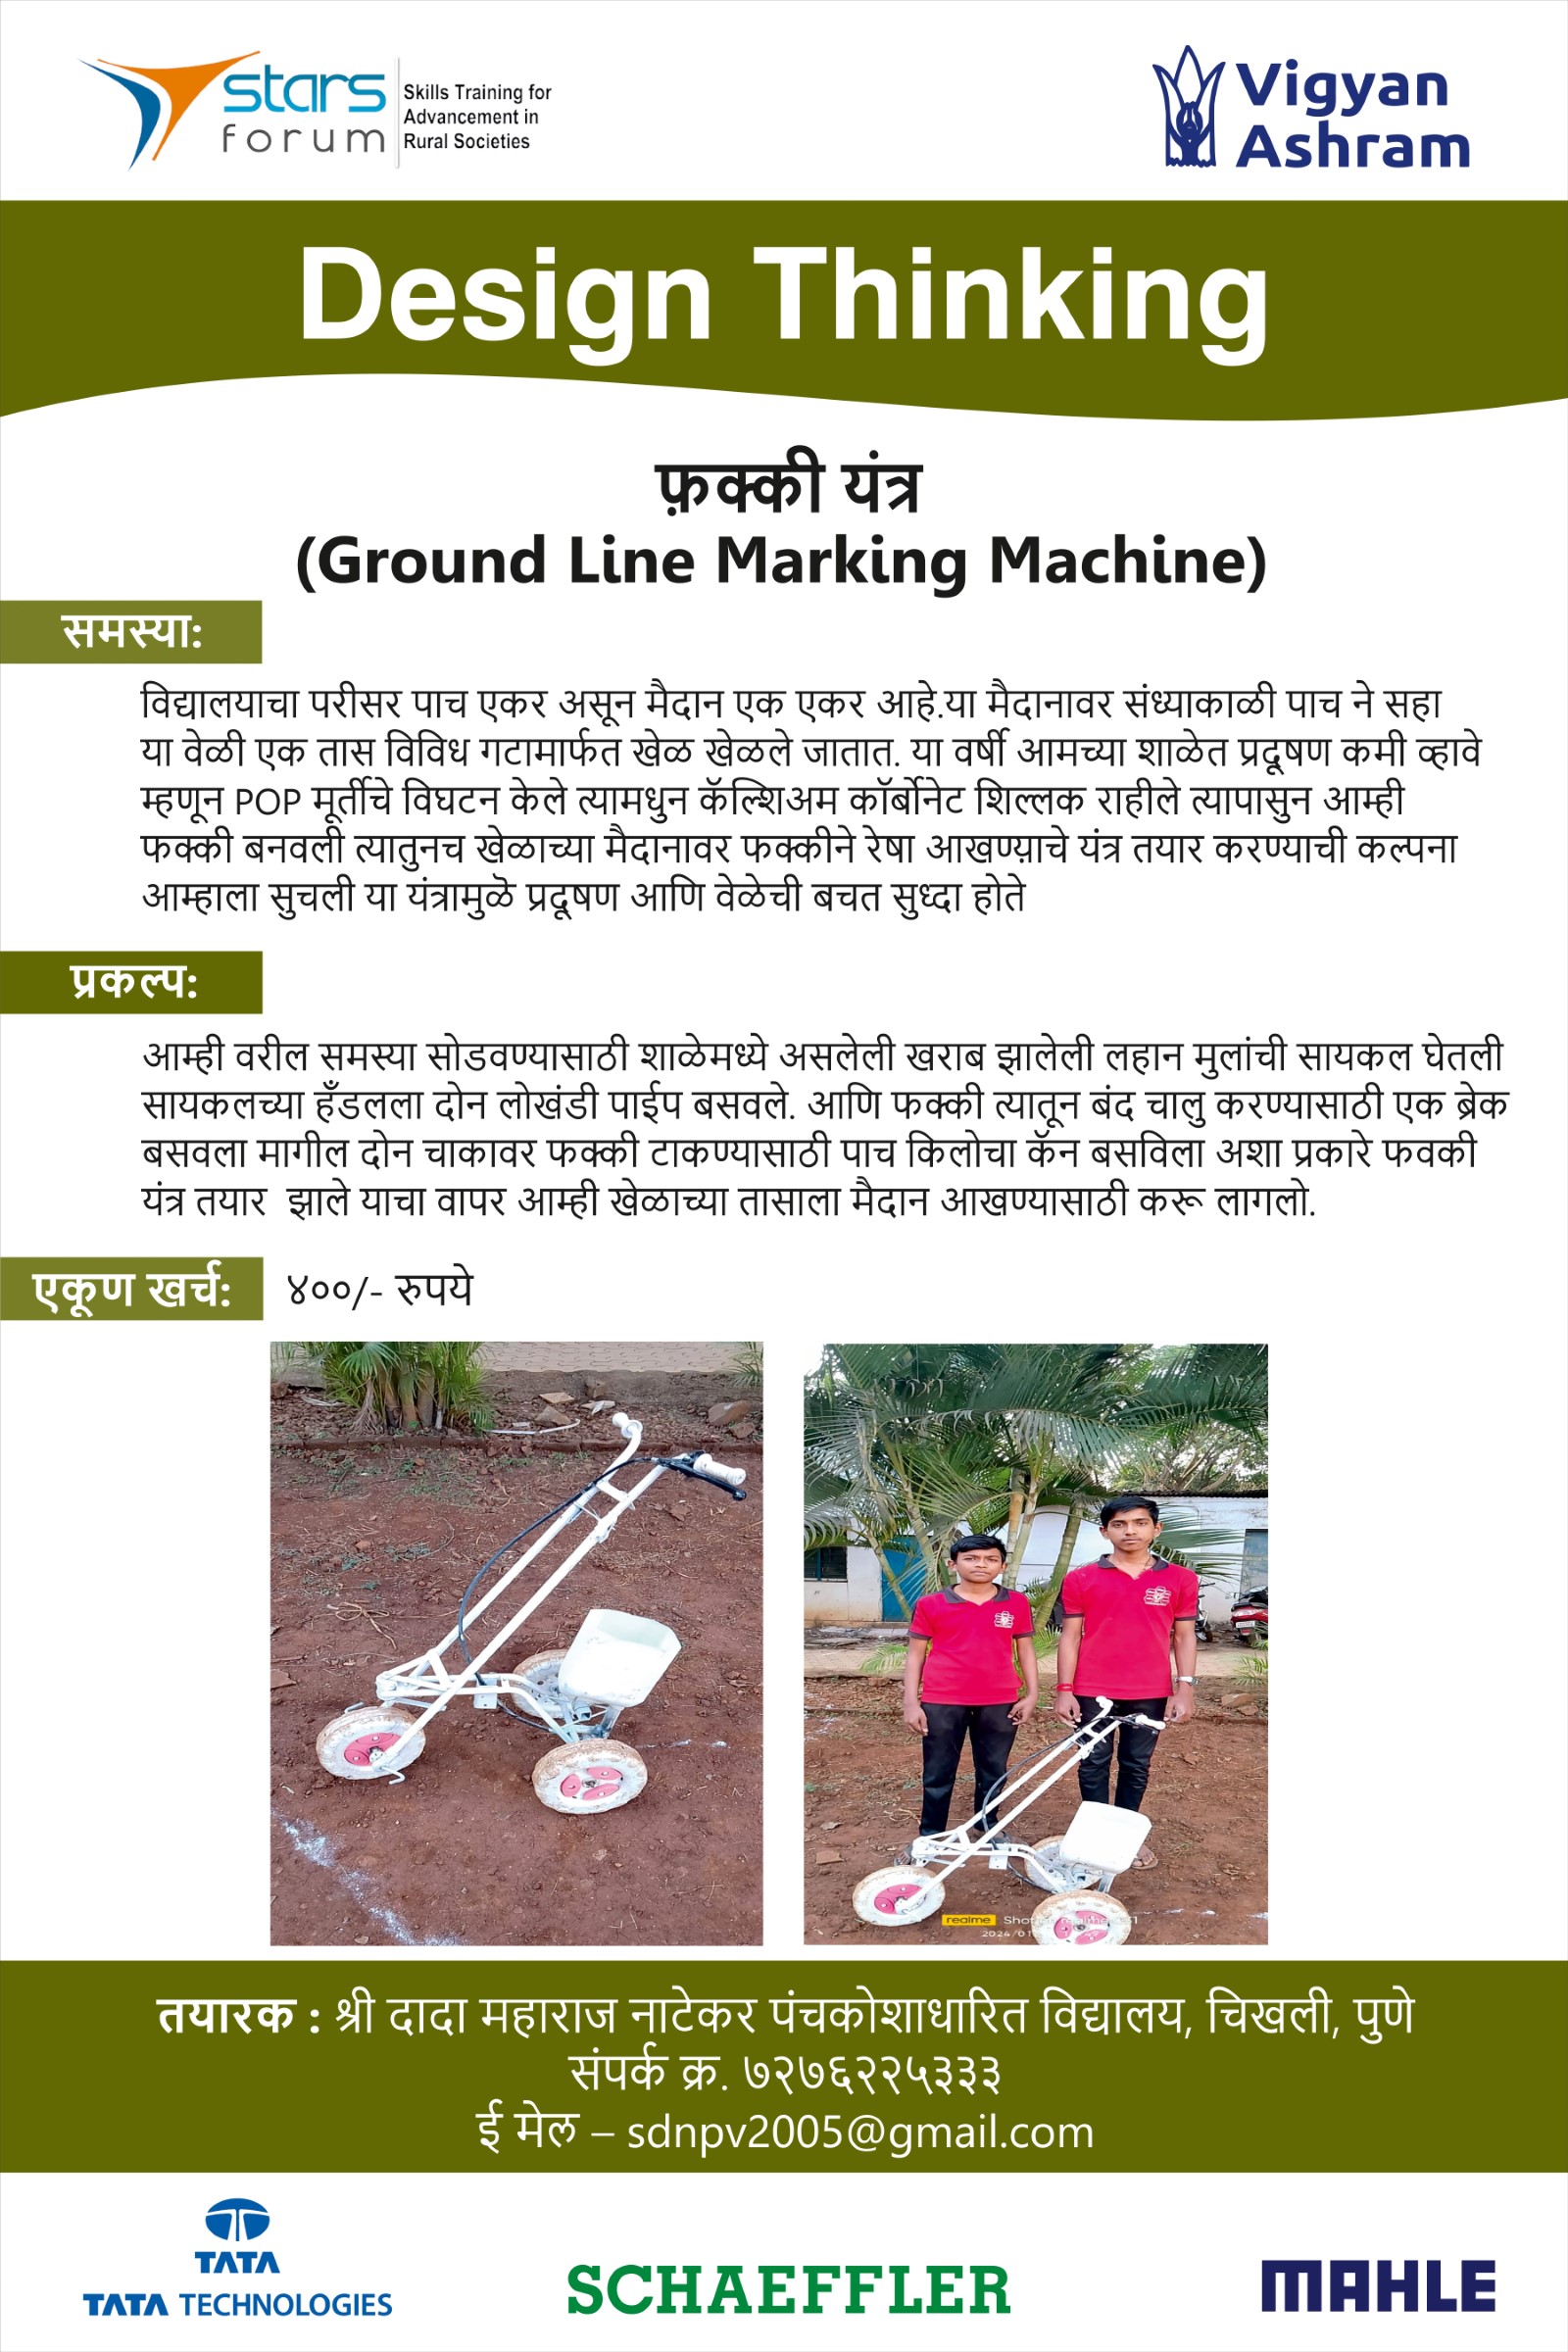 Chikhali - Ground Line Marking Machine